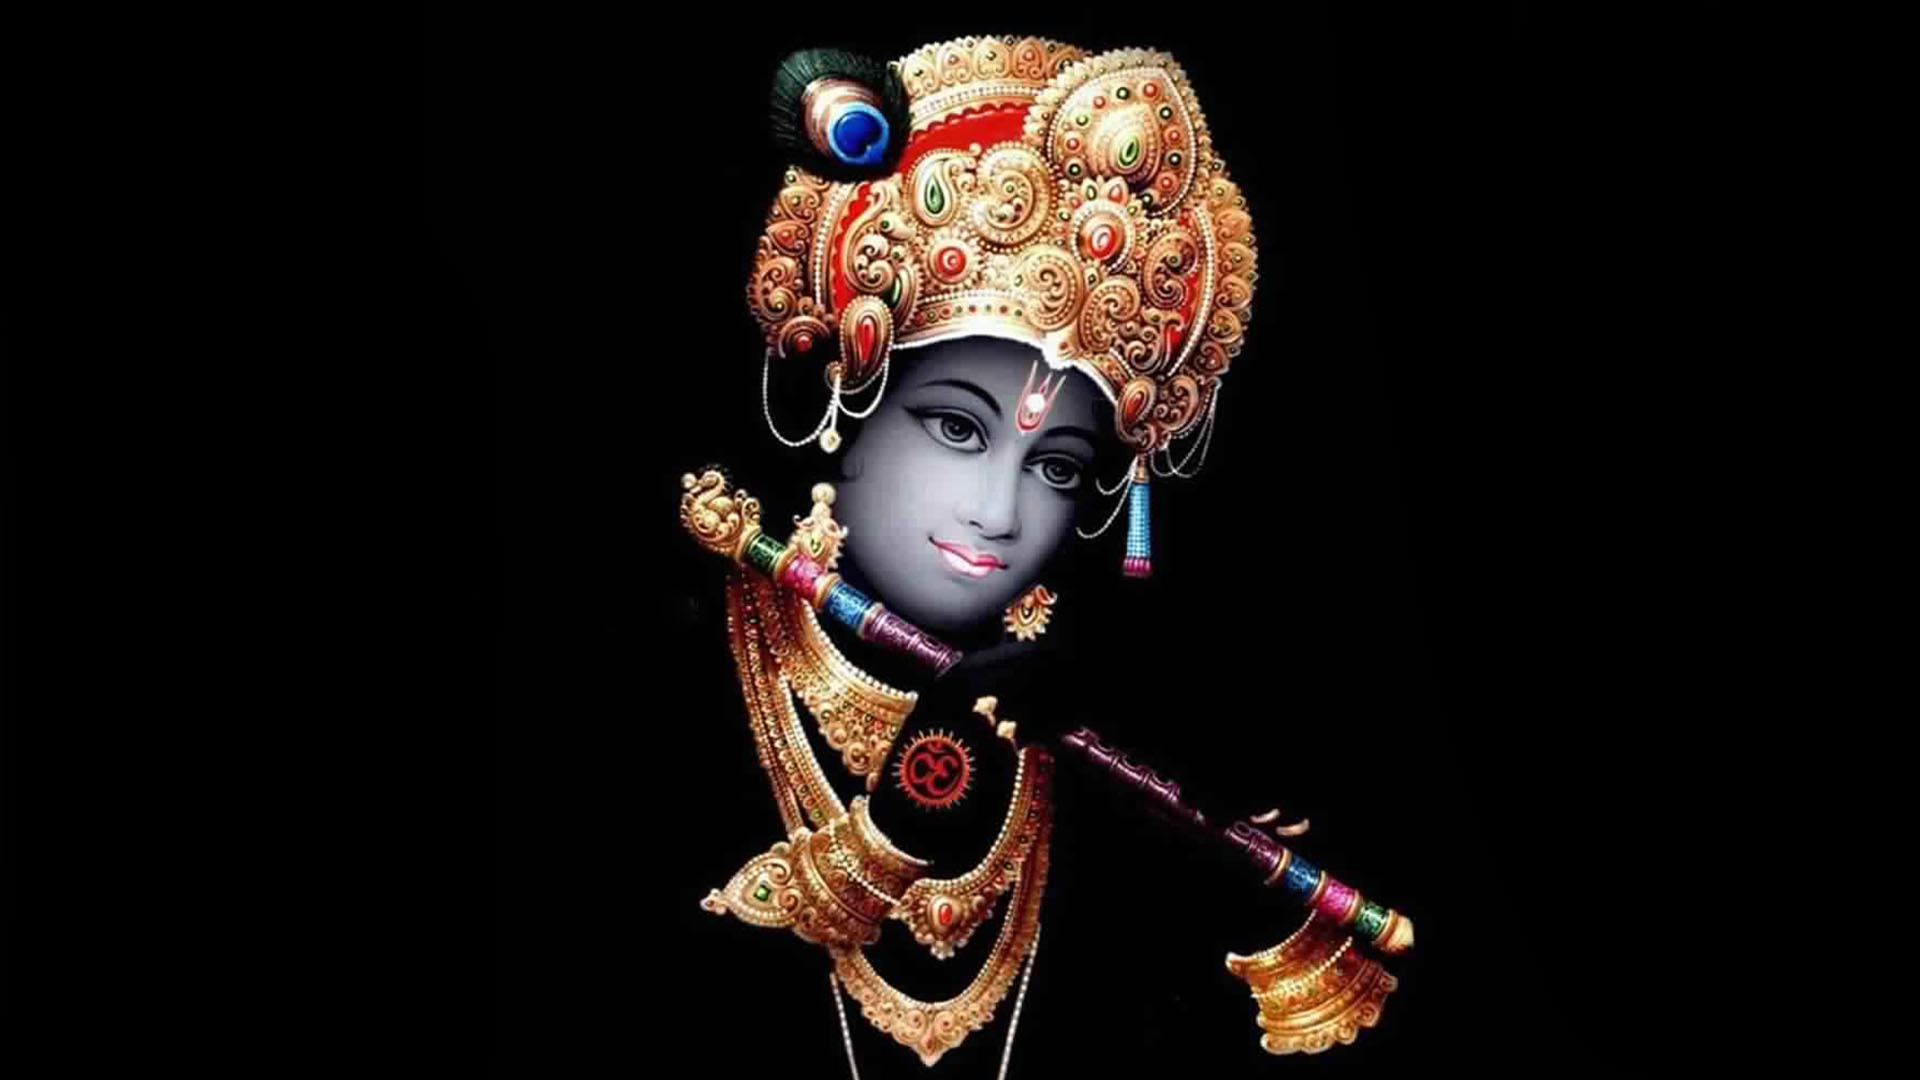 Lord Krishna Hd Wallpapers 1920×1080 | Hindu Gods and Goddesses